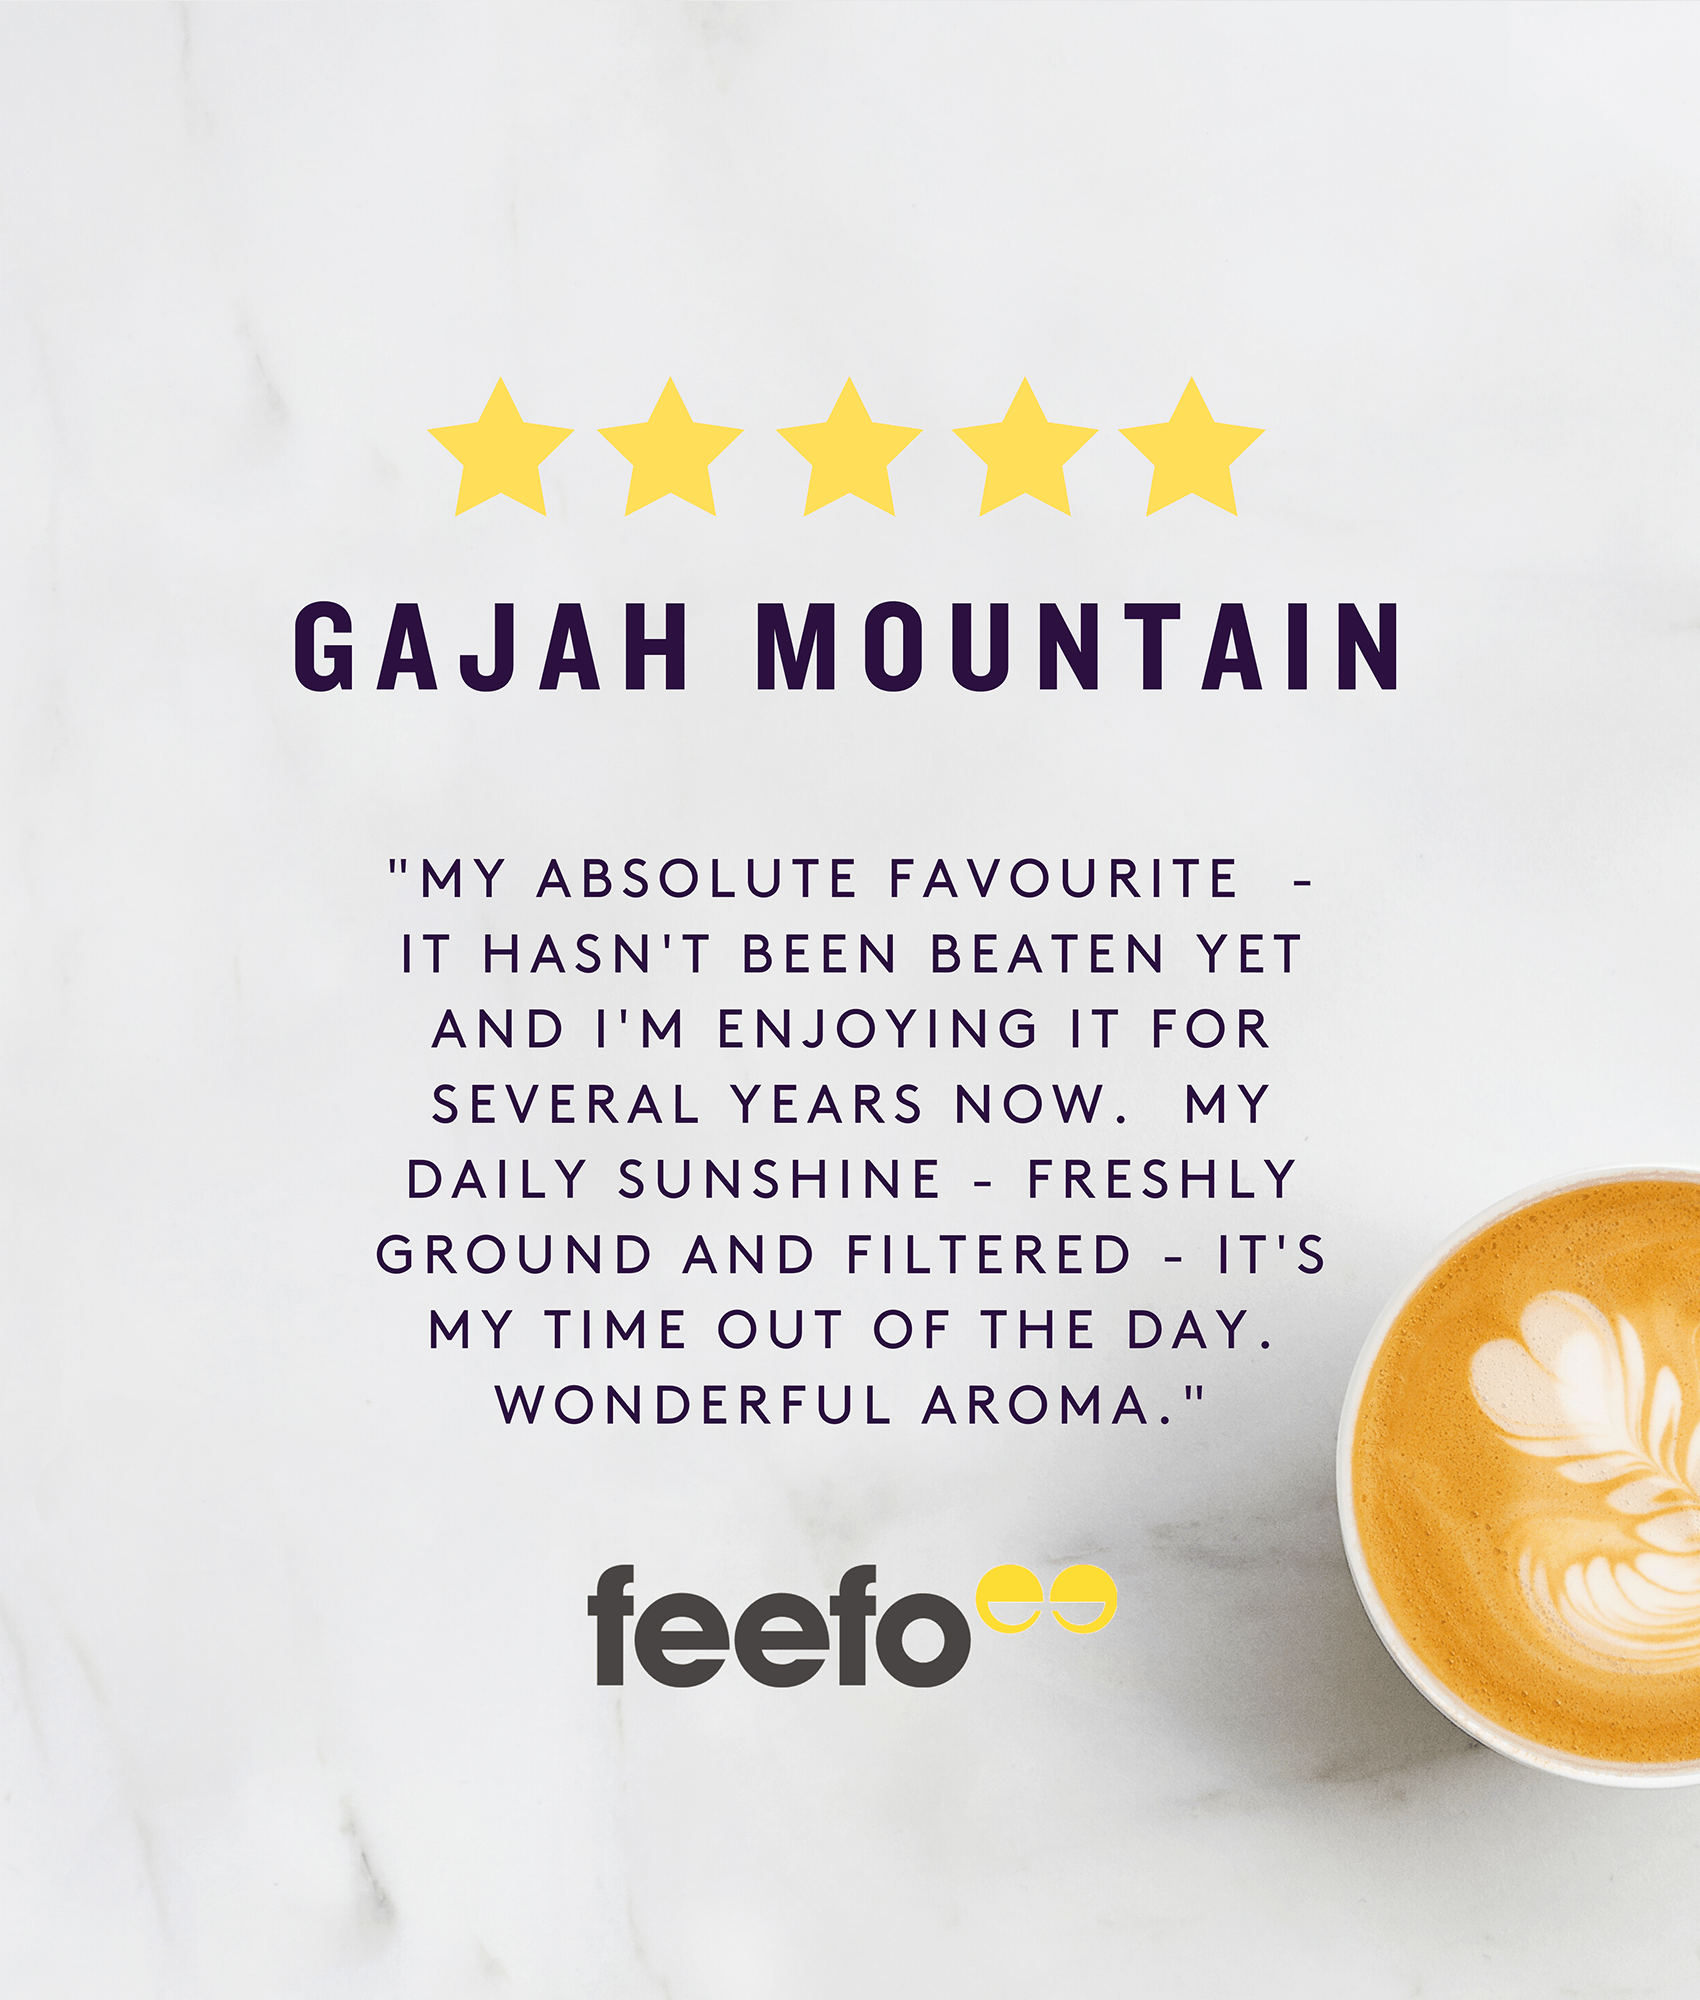 Gajah Mountain, 5 star review